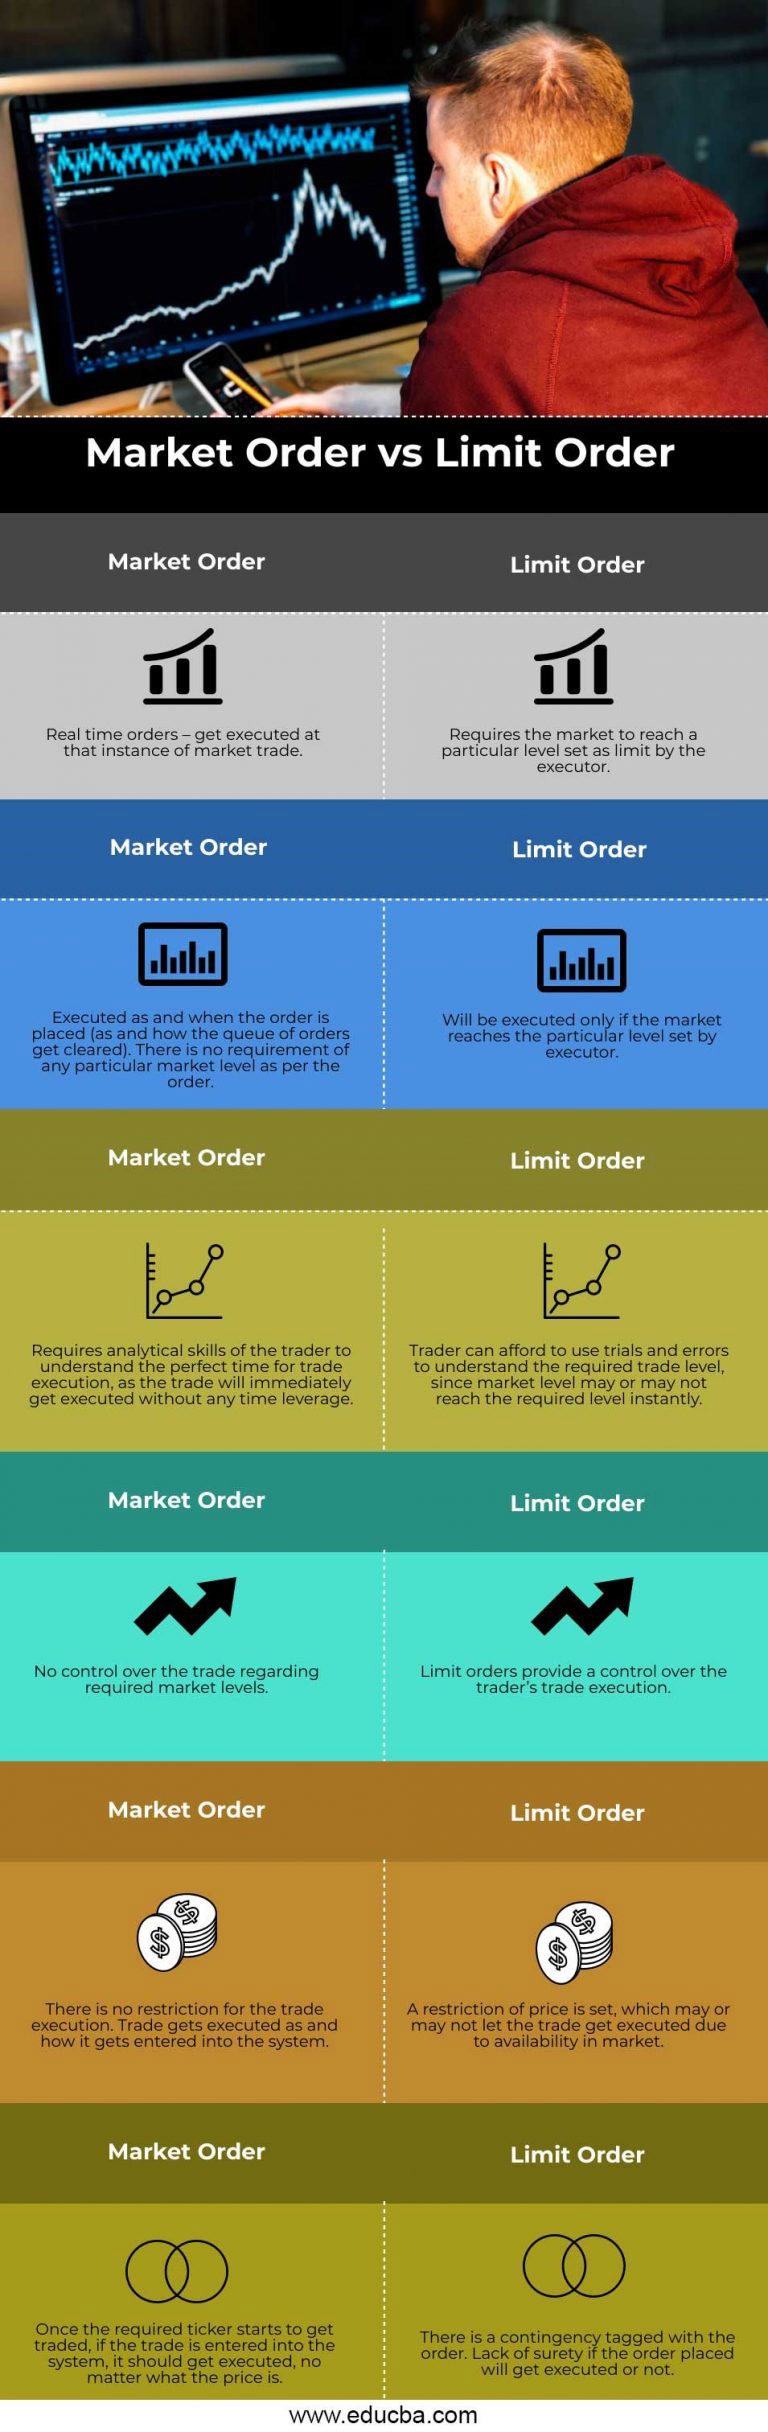 Limit order vs market order binance 3.7 bitcoins